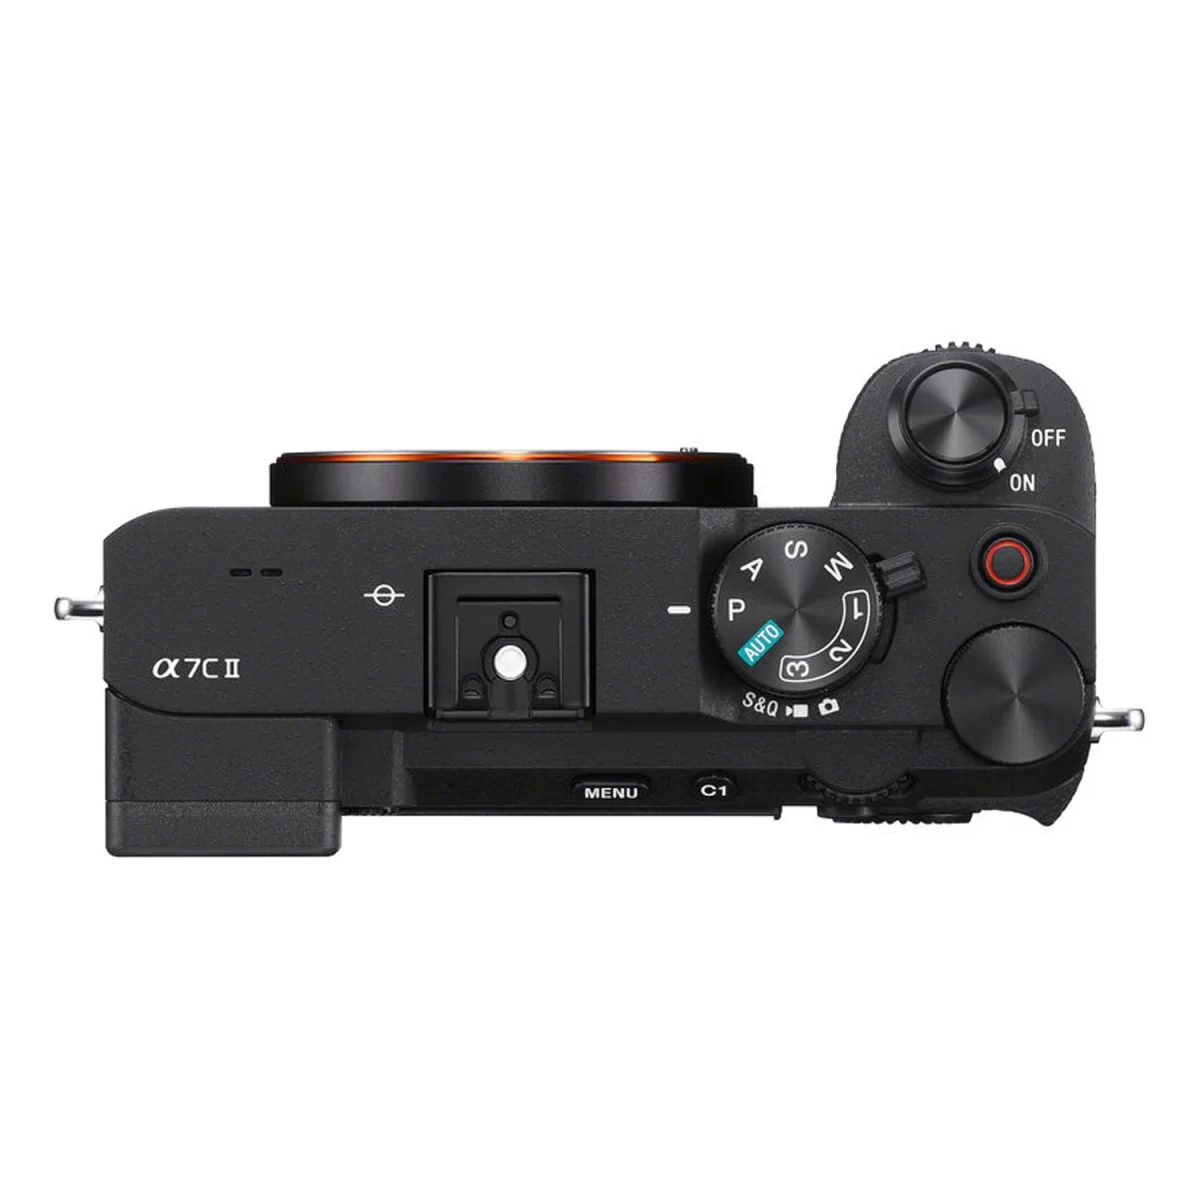 Sony Alpha a7C II mirrorless camera with black body 6 1